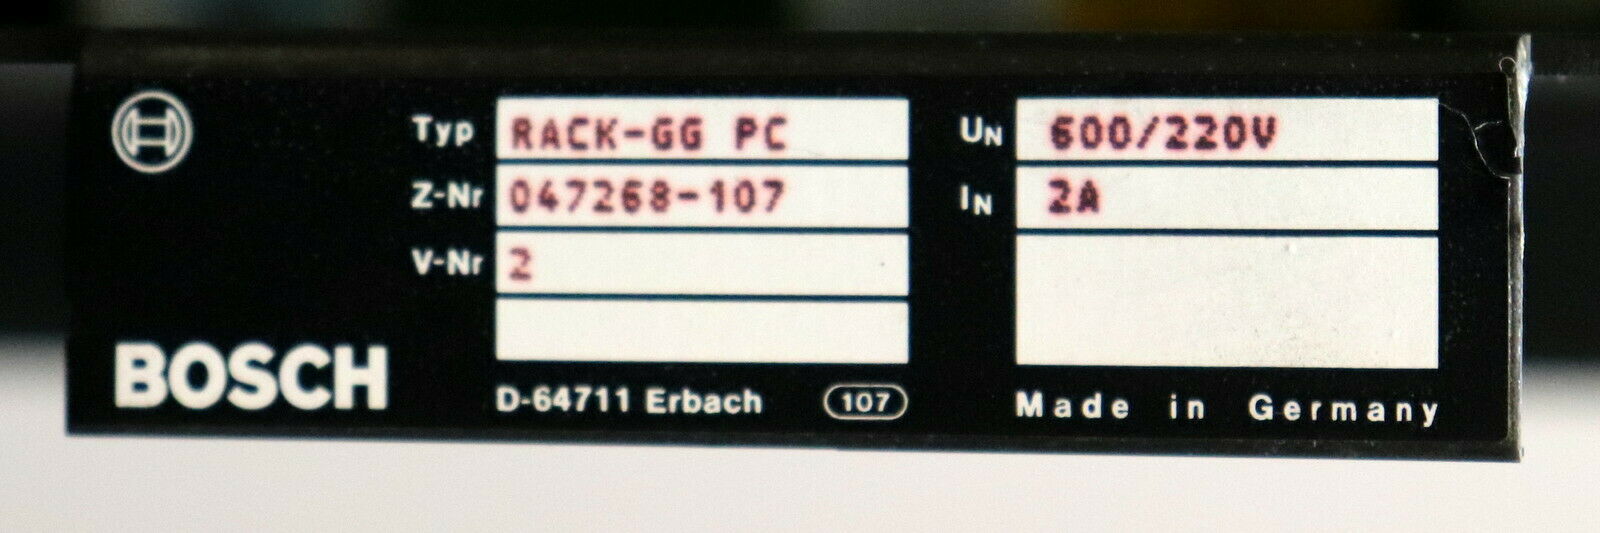 BOSCH RACK-GG PC 047268-107 V-Nr. 2 UN=600/220V In = 2A mit 2 Lüftern